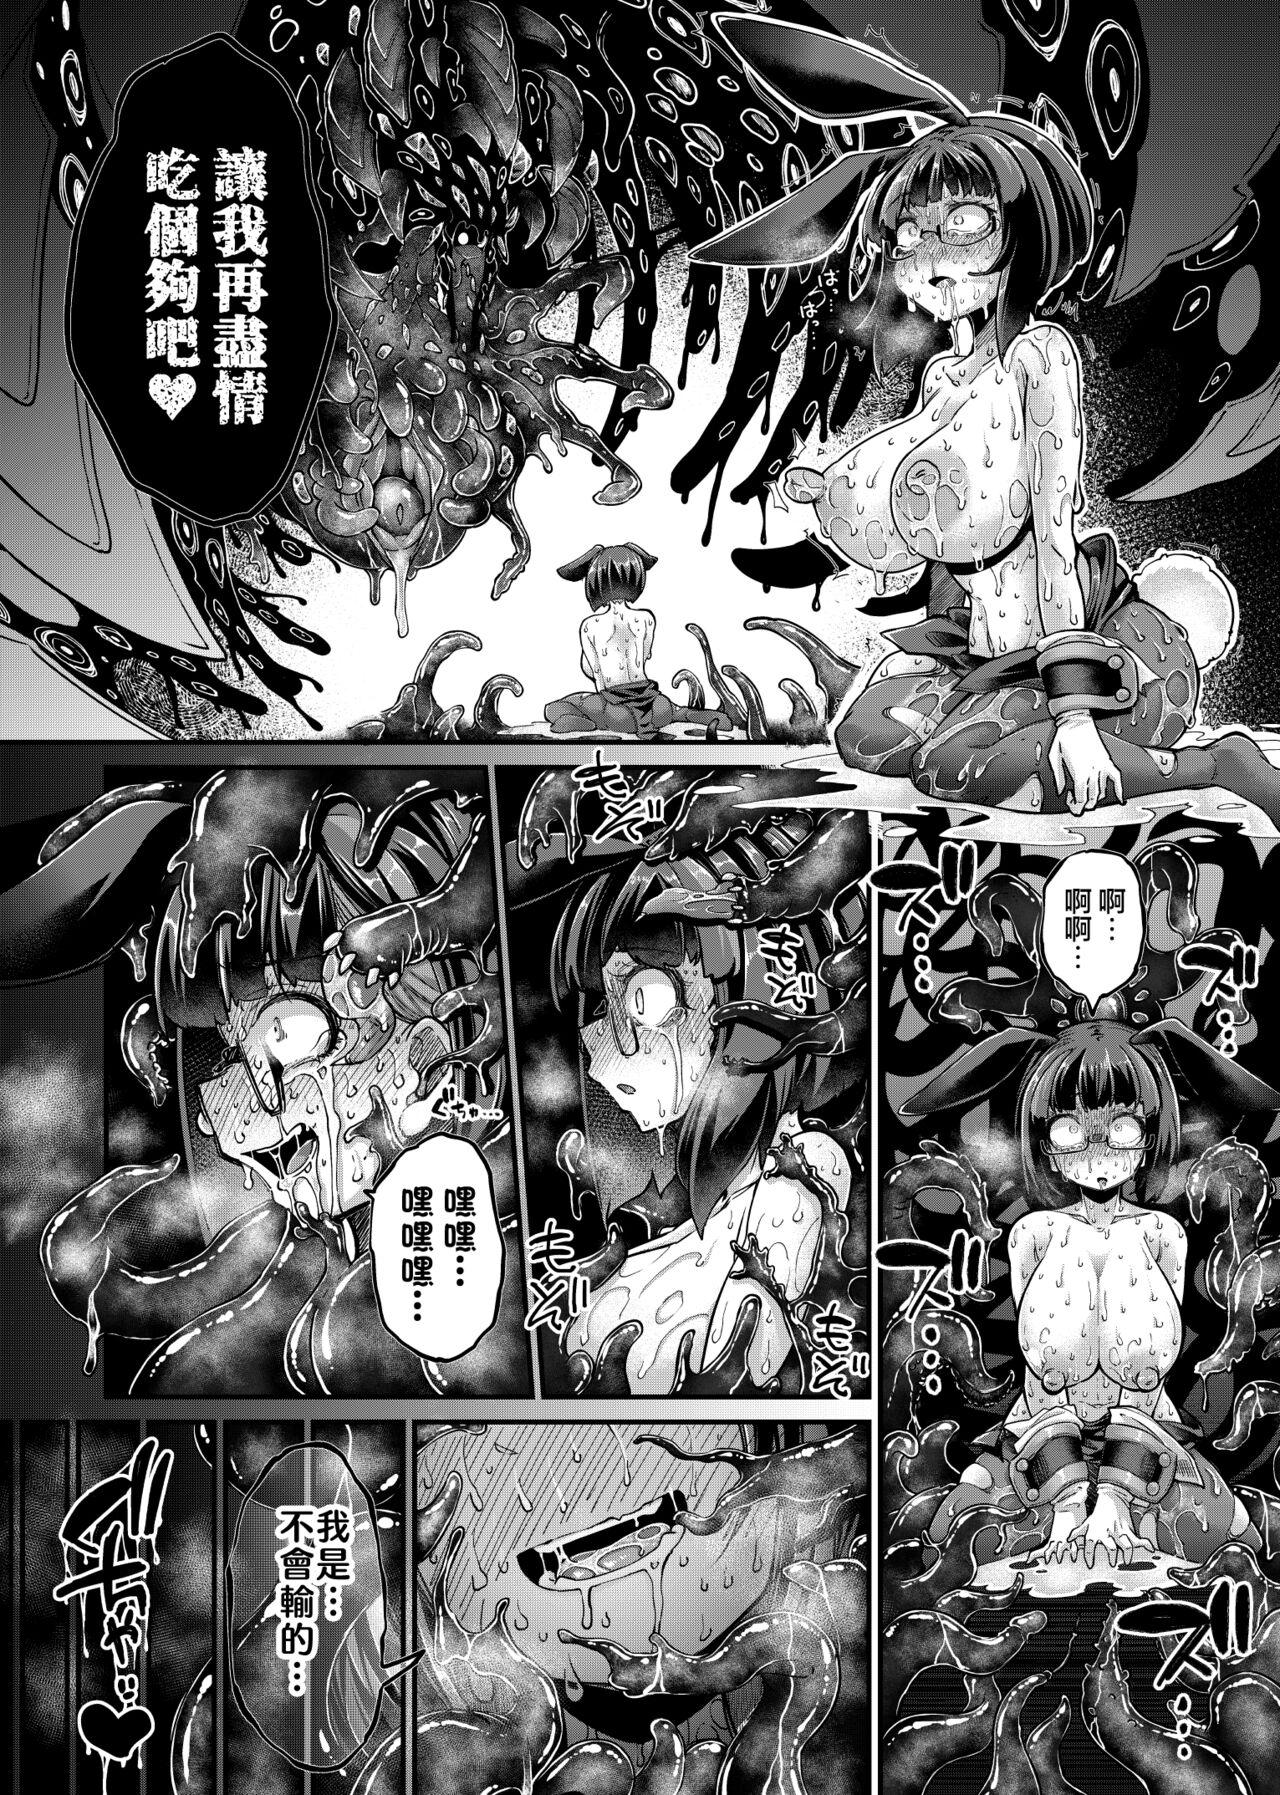 Reginetta-san vs Jashin Dungeon 26